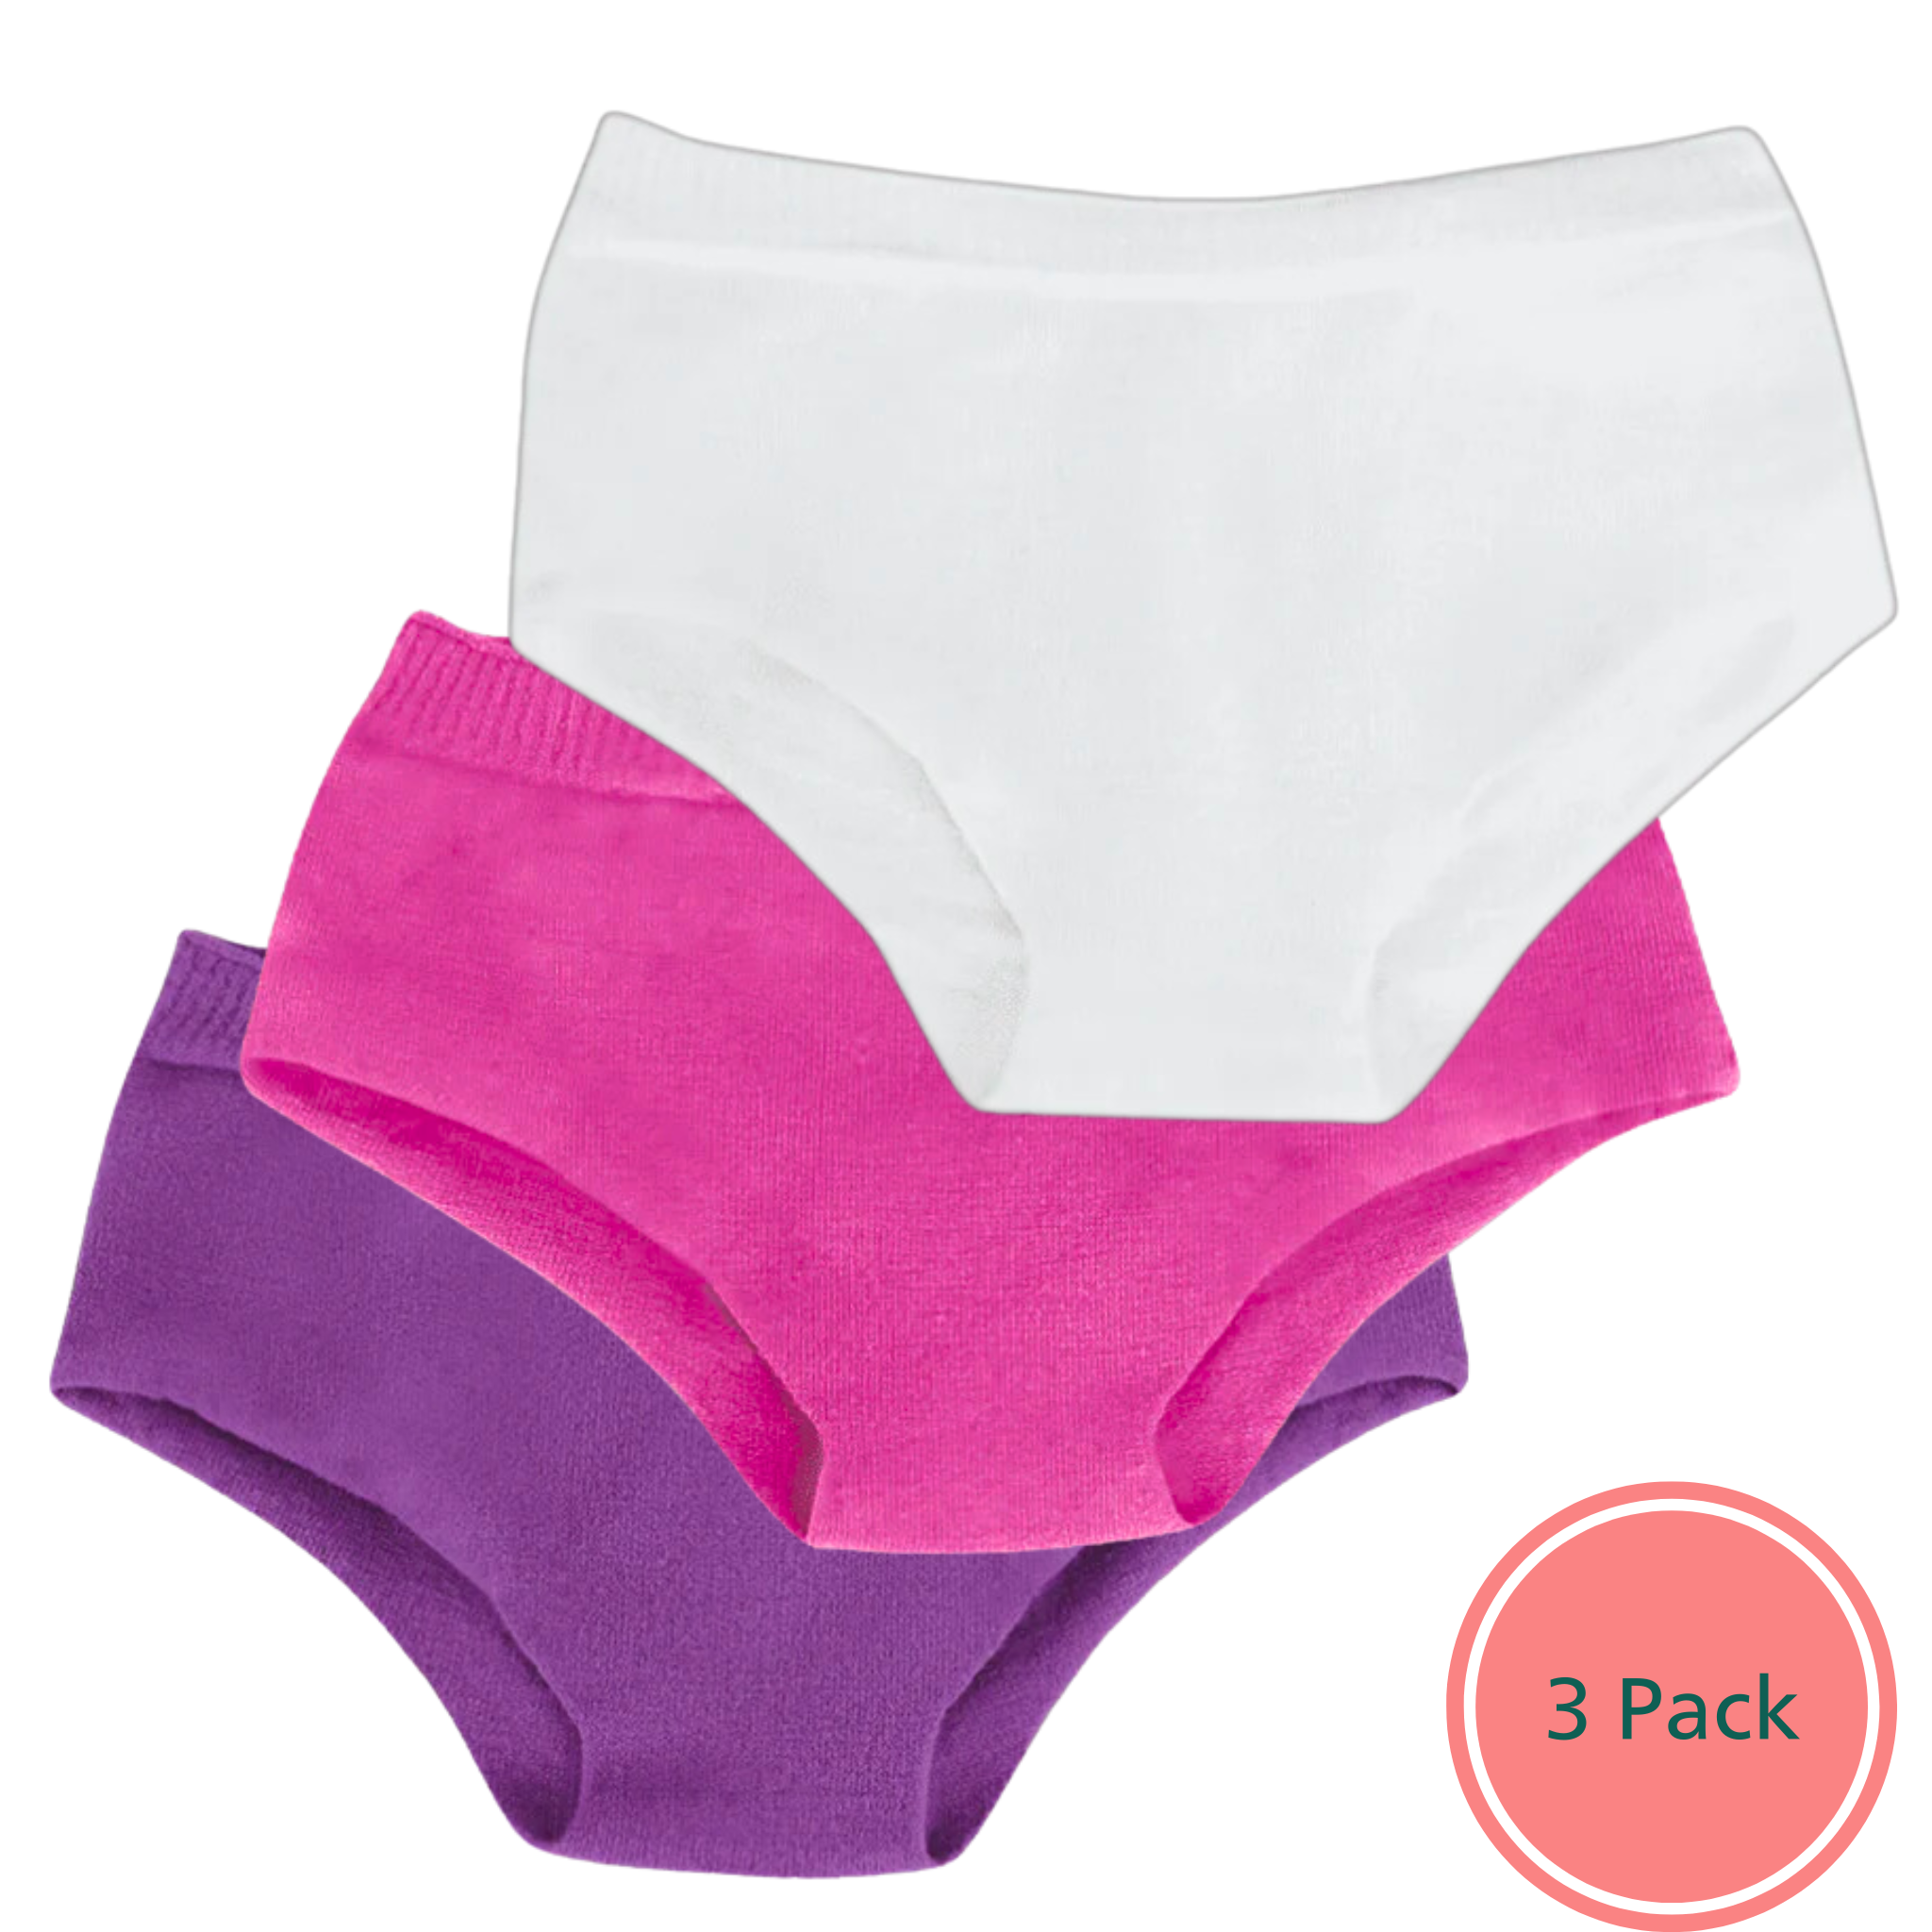  Reebok 6-Pack Seamless Toddlers Girls Soft Underwear